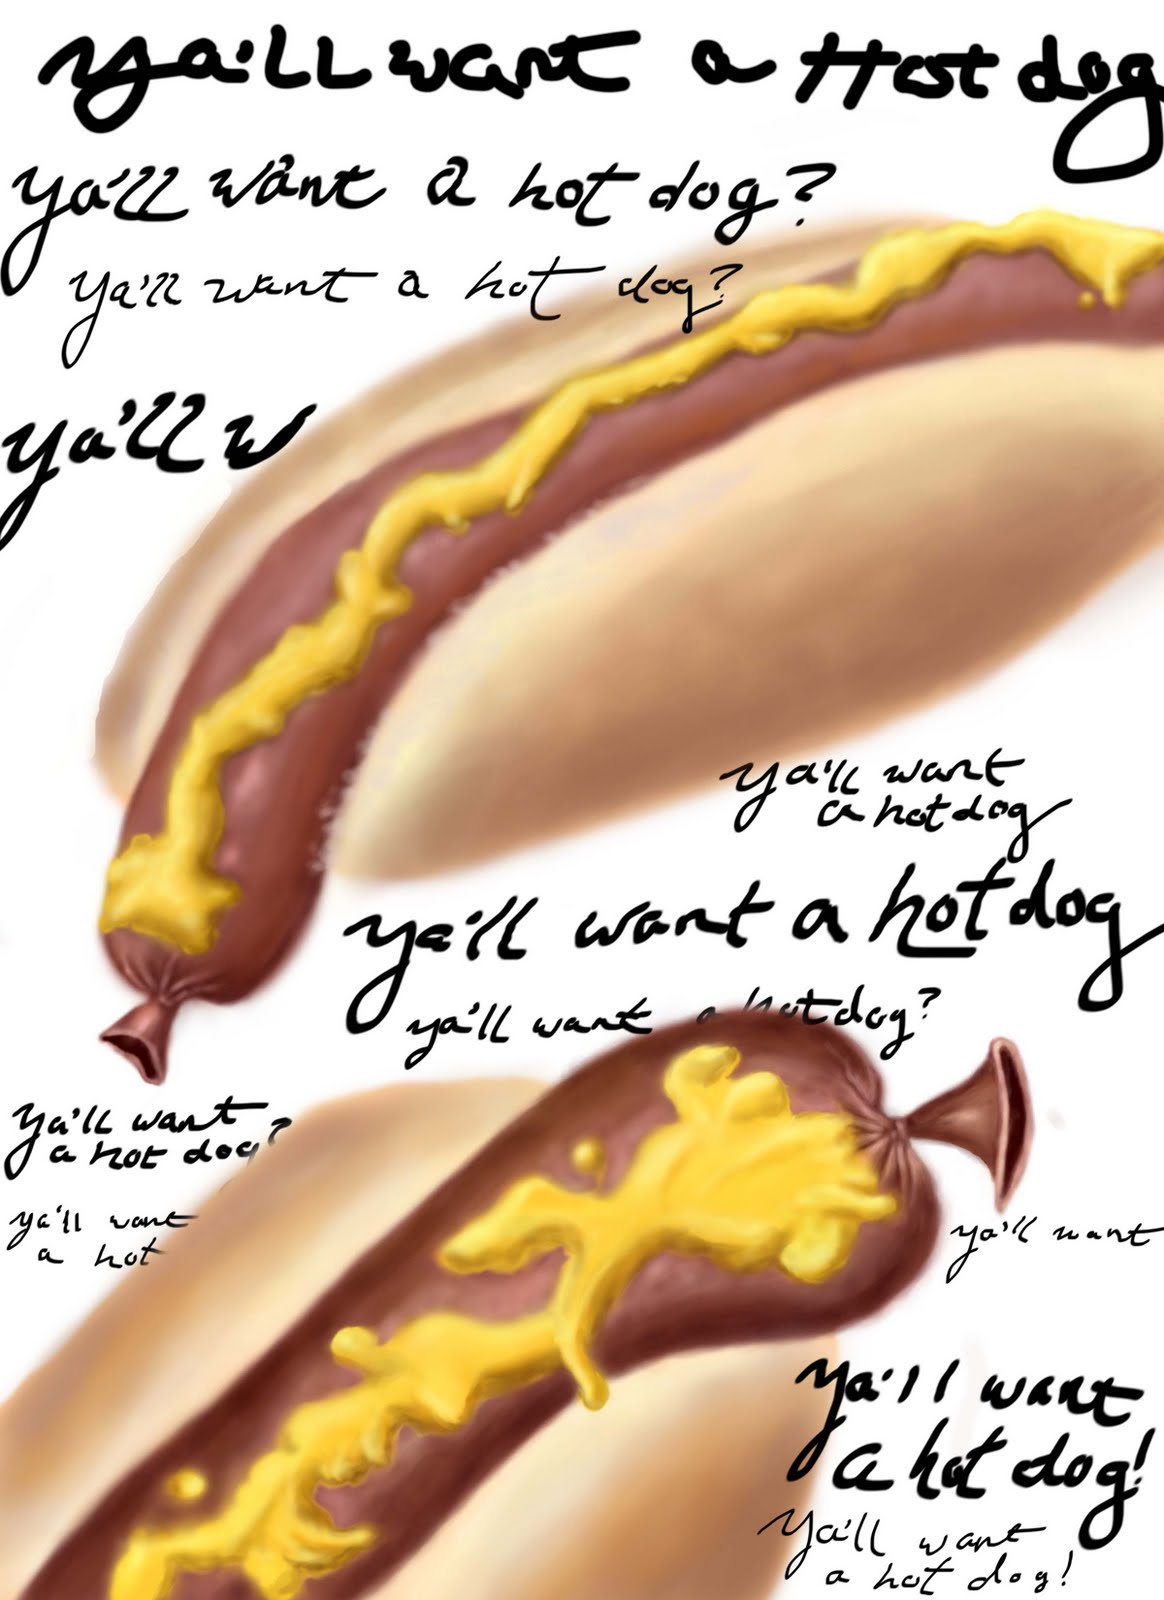 [Hotdog.jpg]